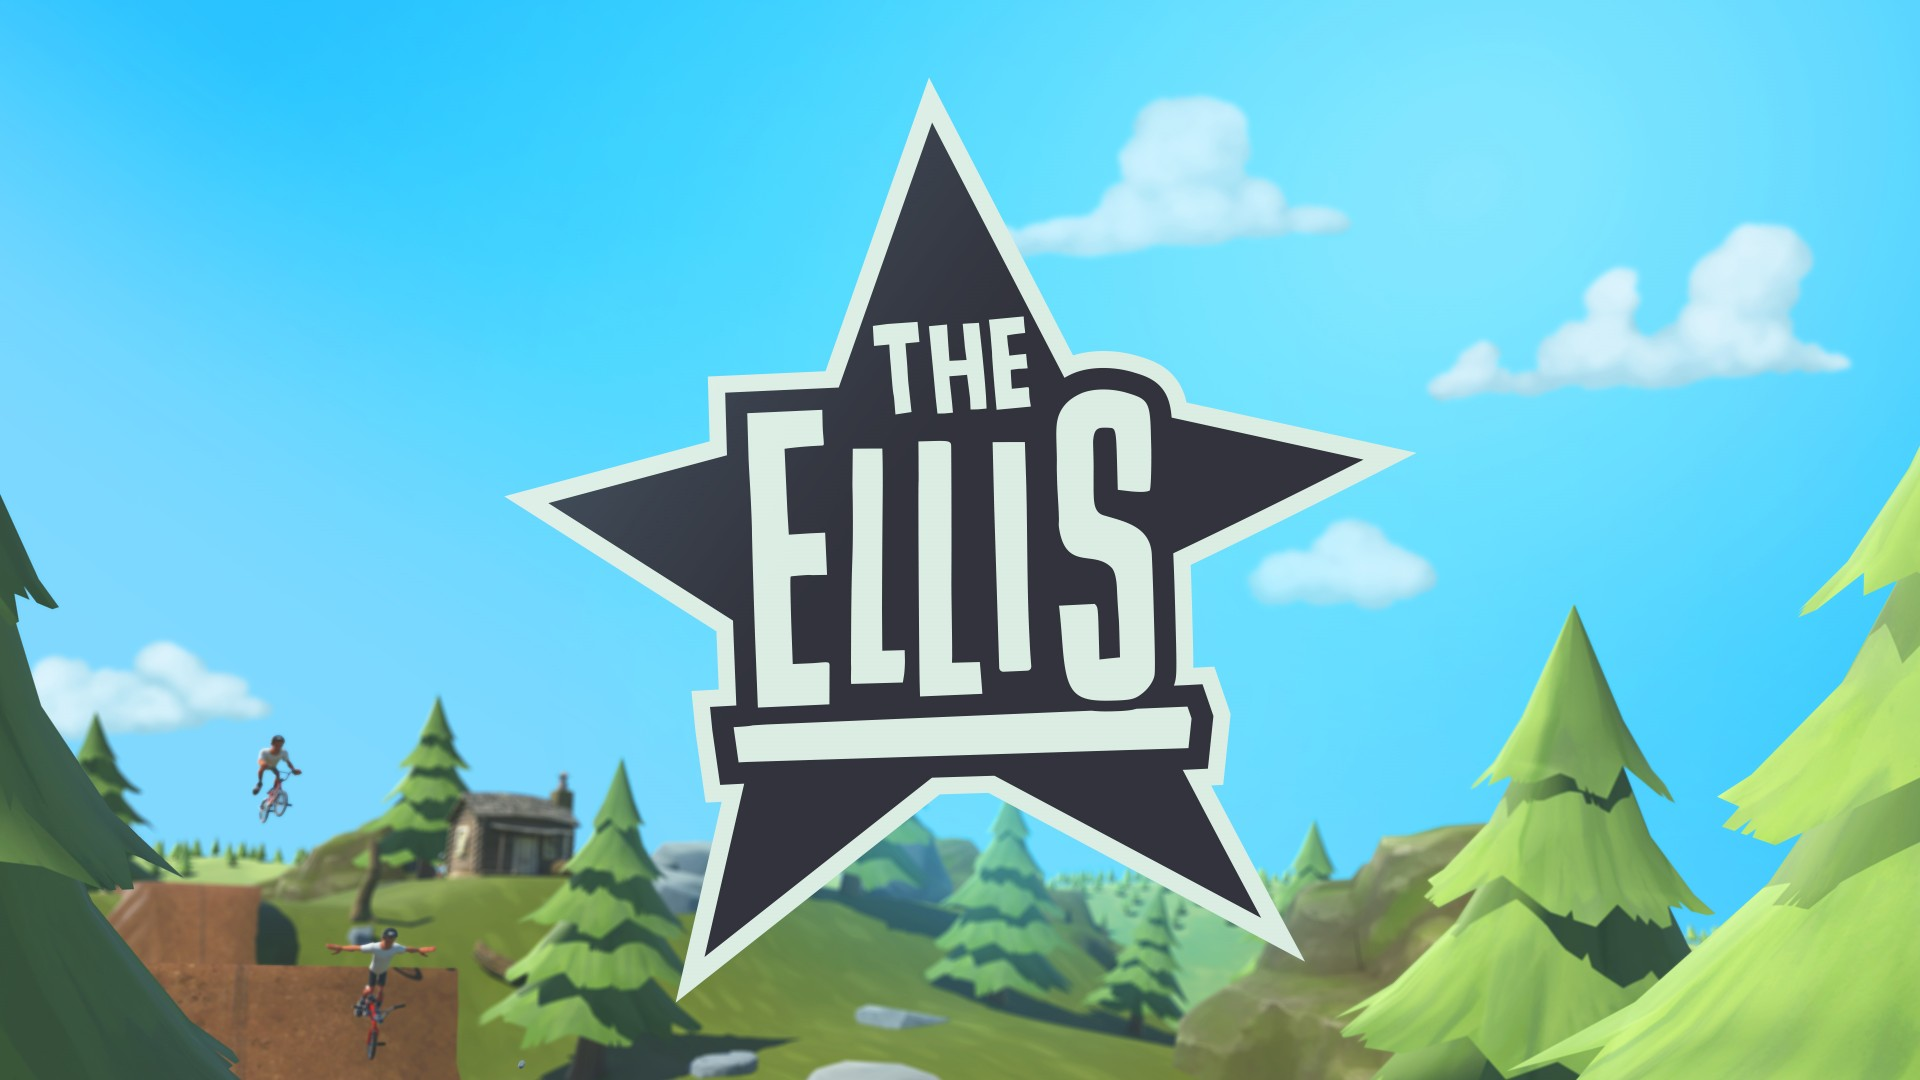 The Ellis